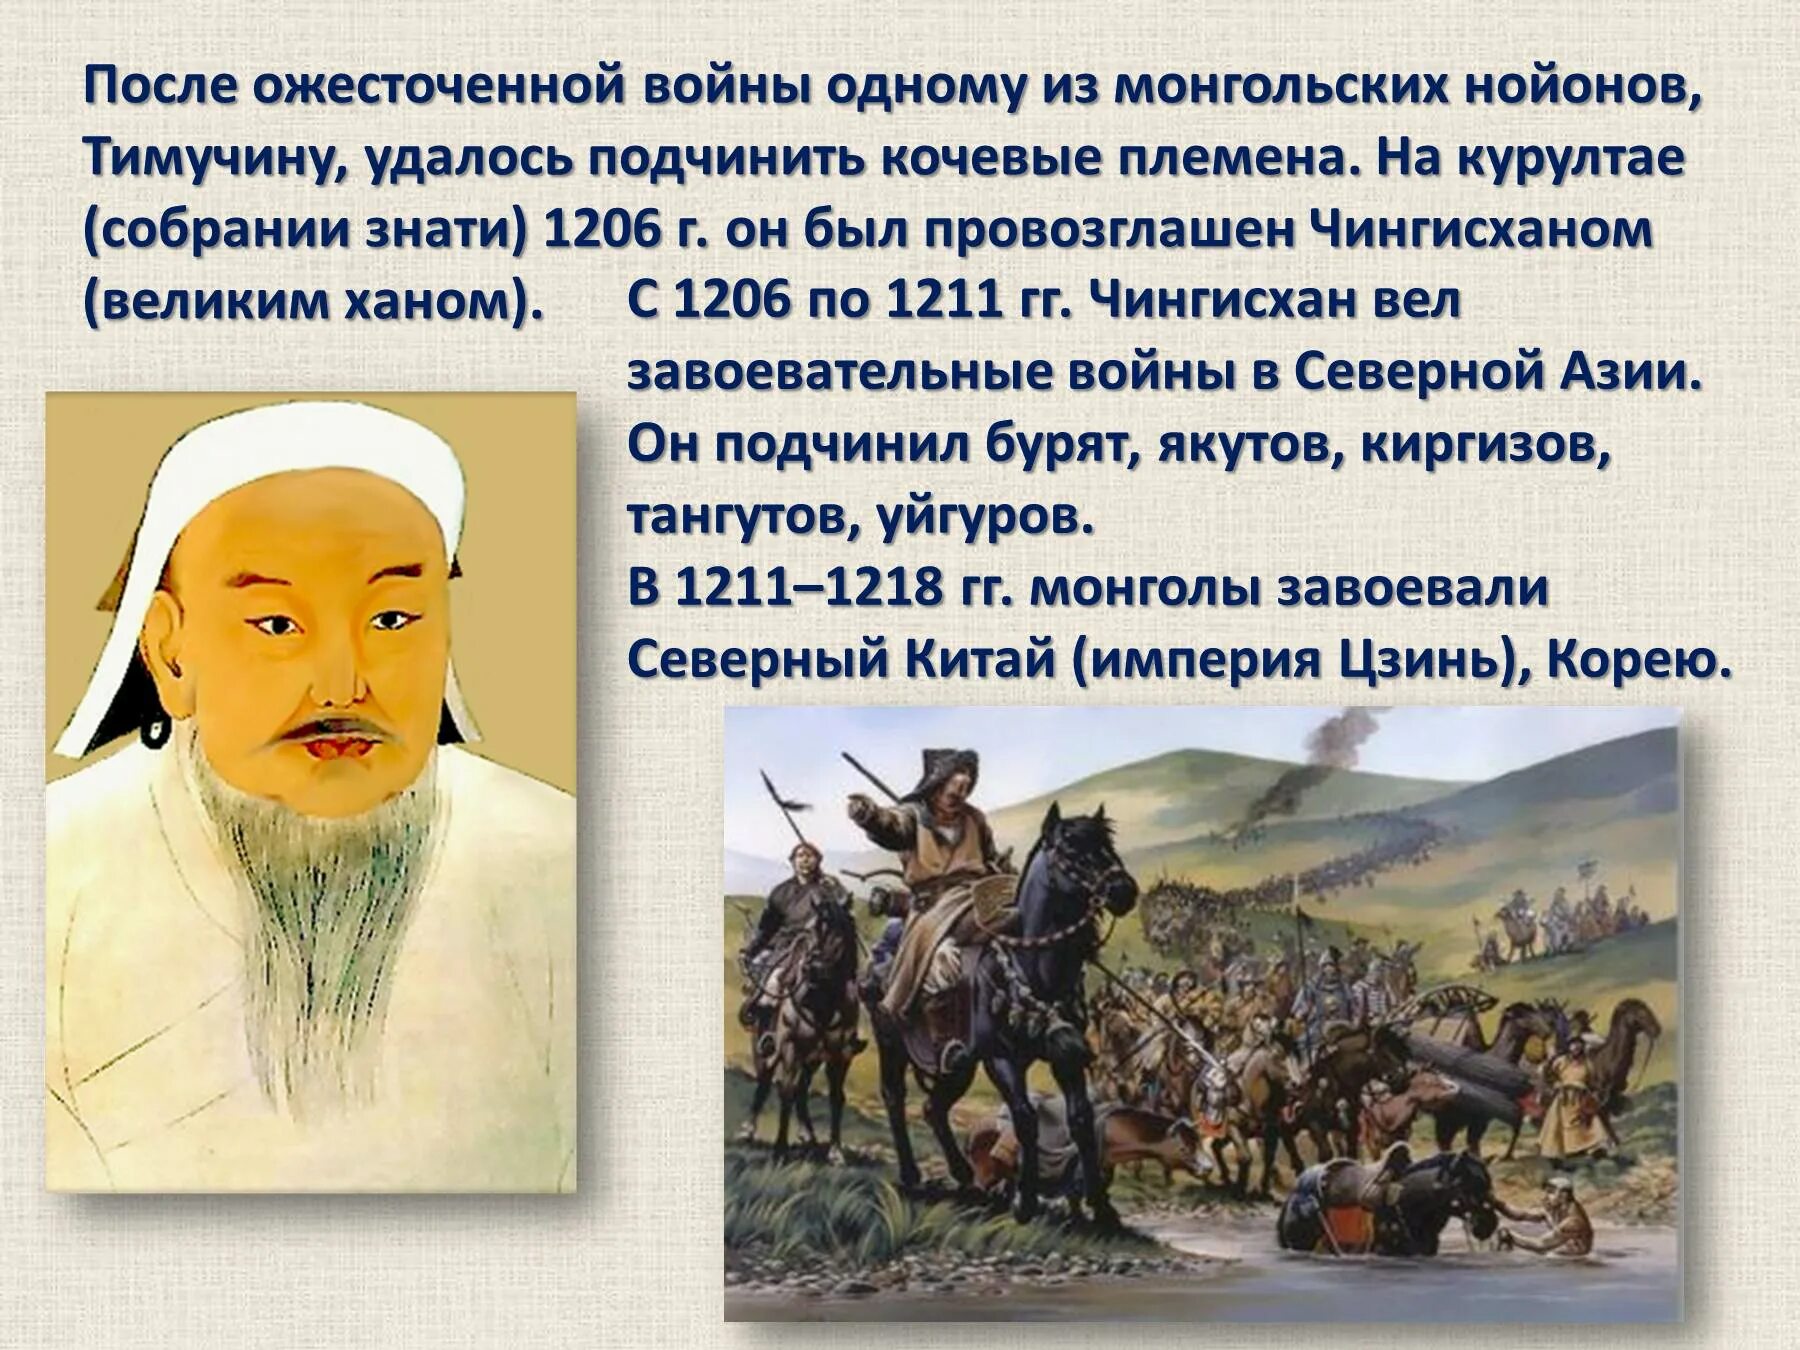 Монголия Чингис Хан. Образование империи Чингисхана 6 класс. Темучин-нойон. Великие ханы после чингисхана